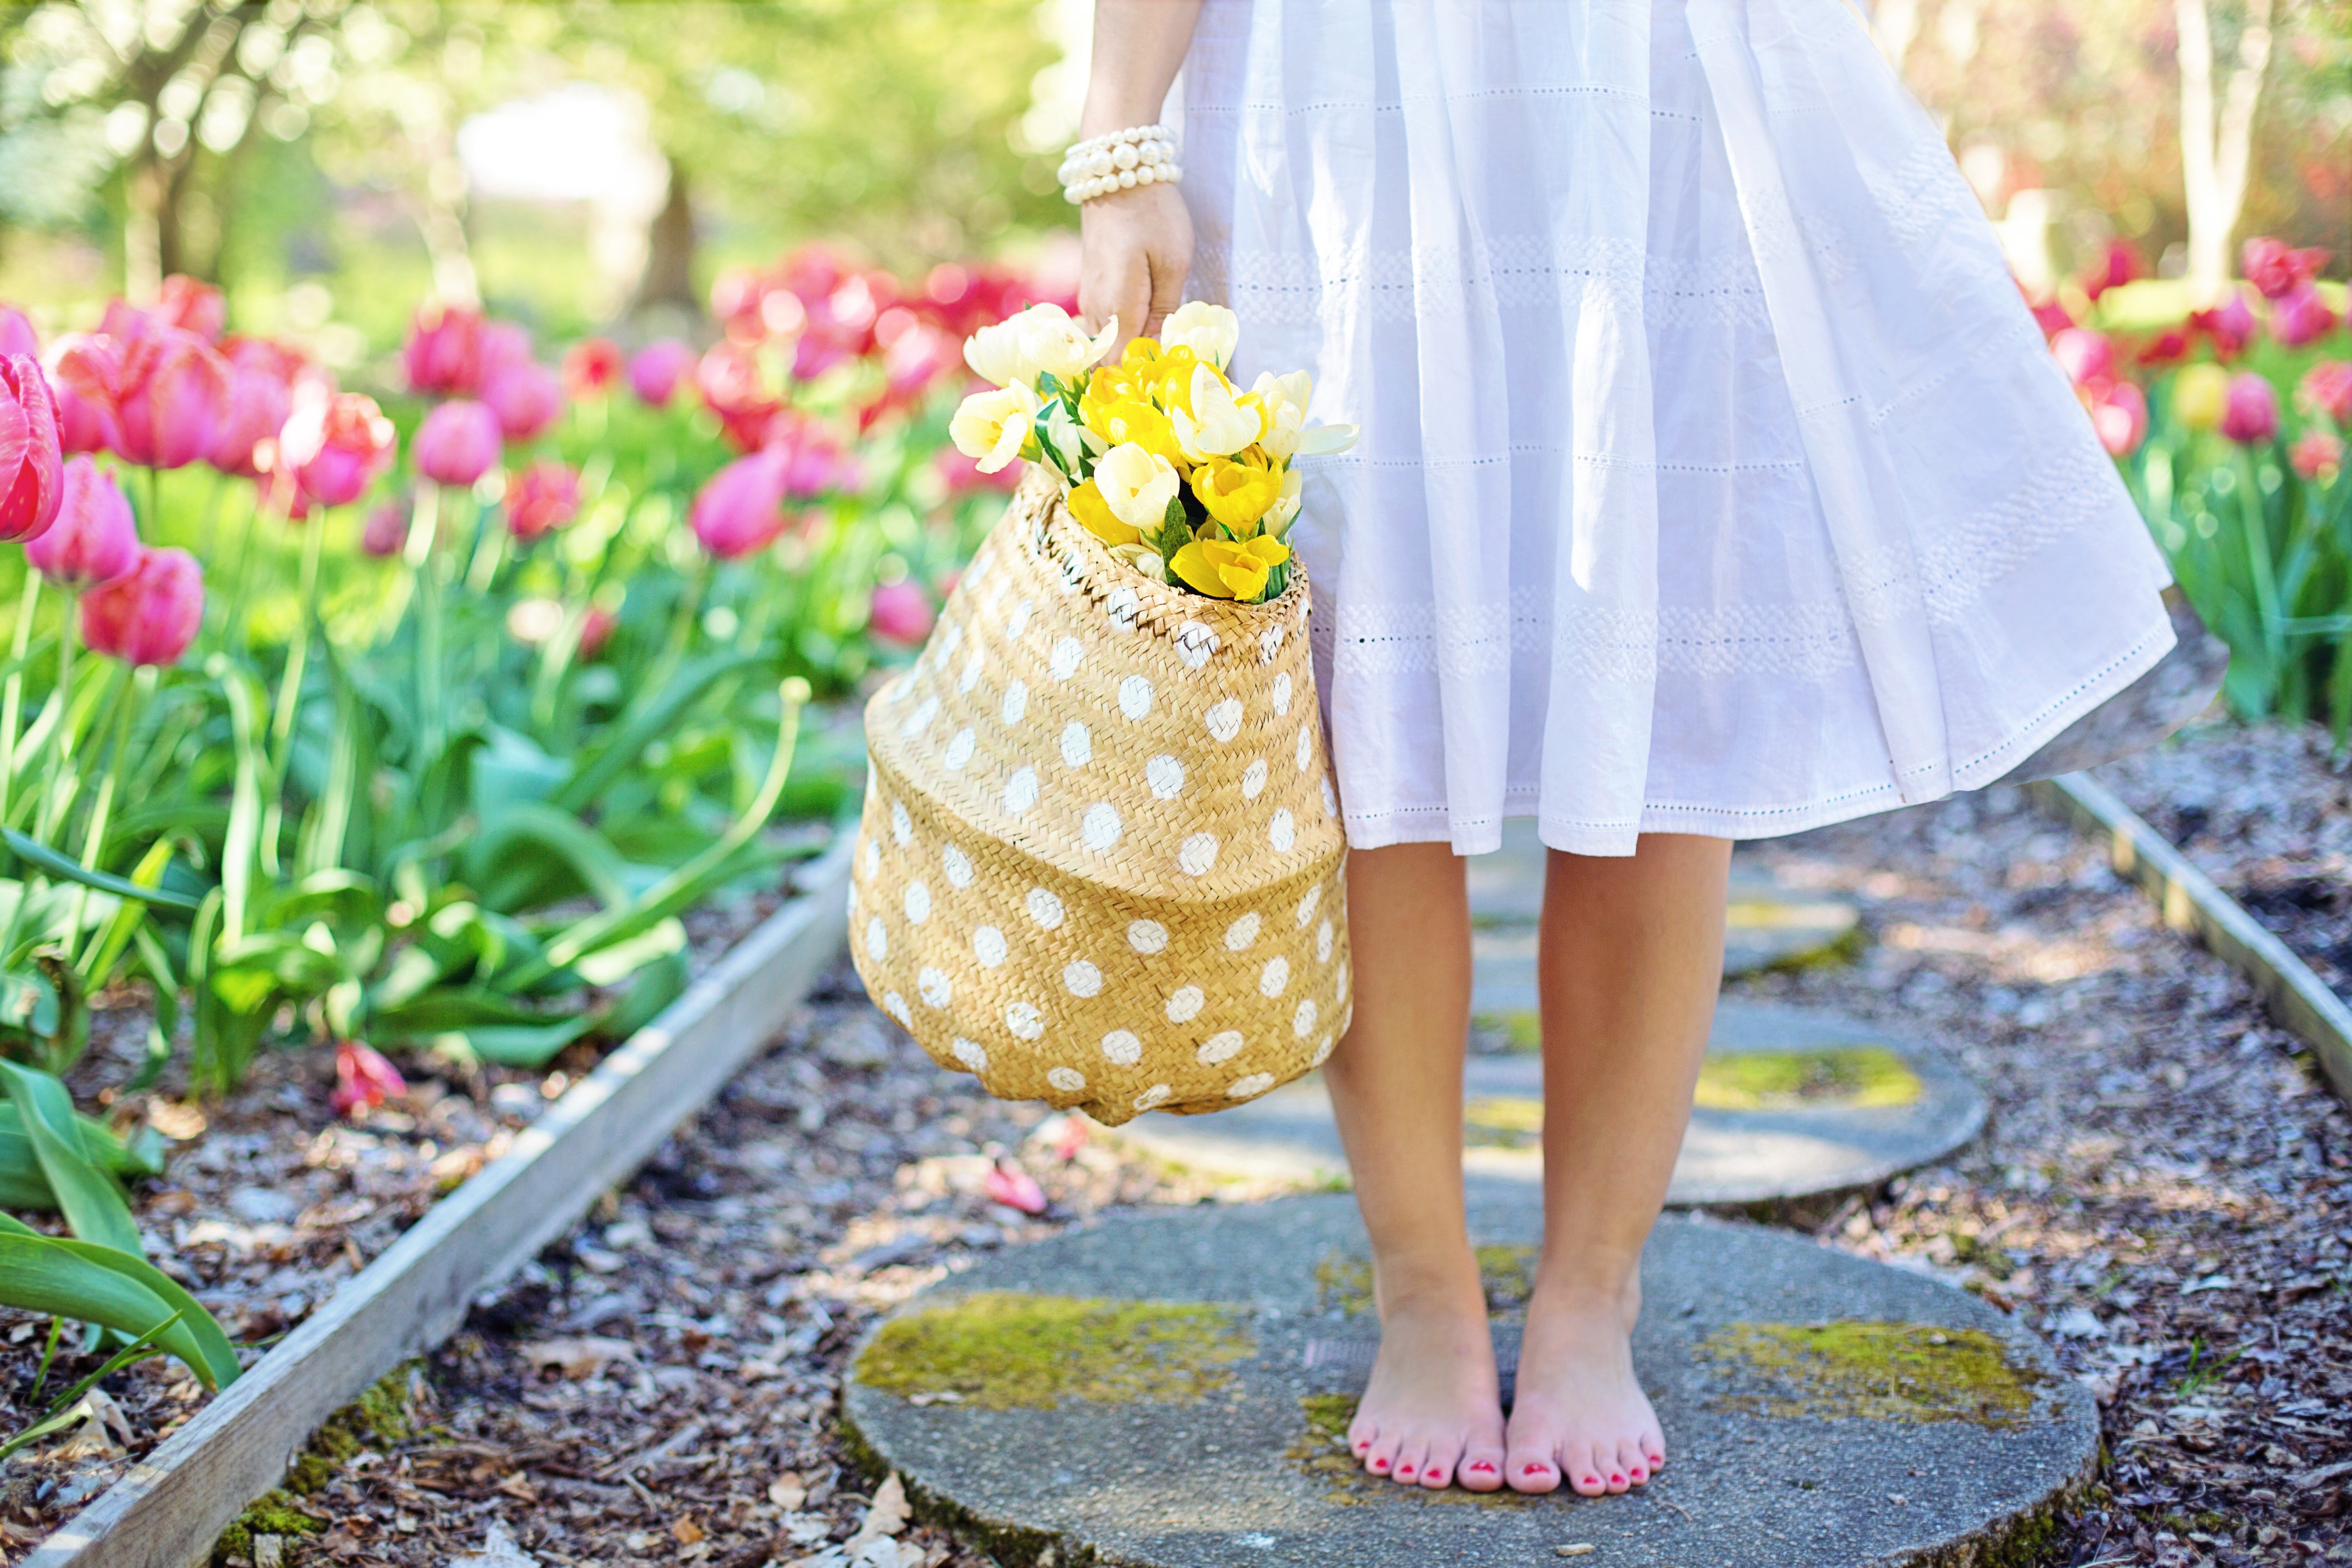 Mindful walking barefoot in a garden